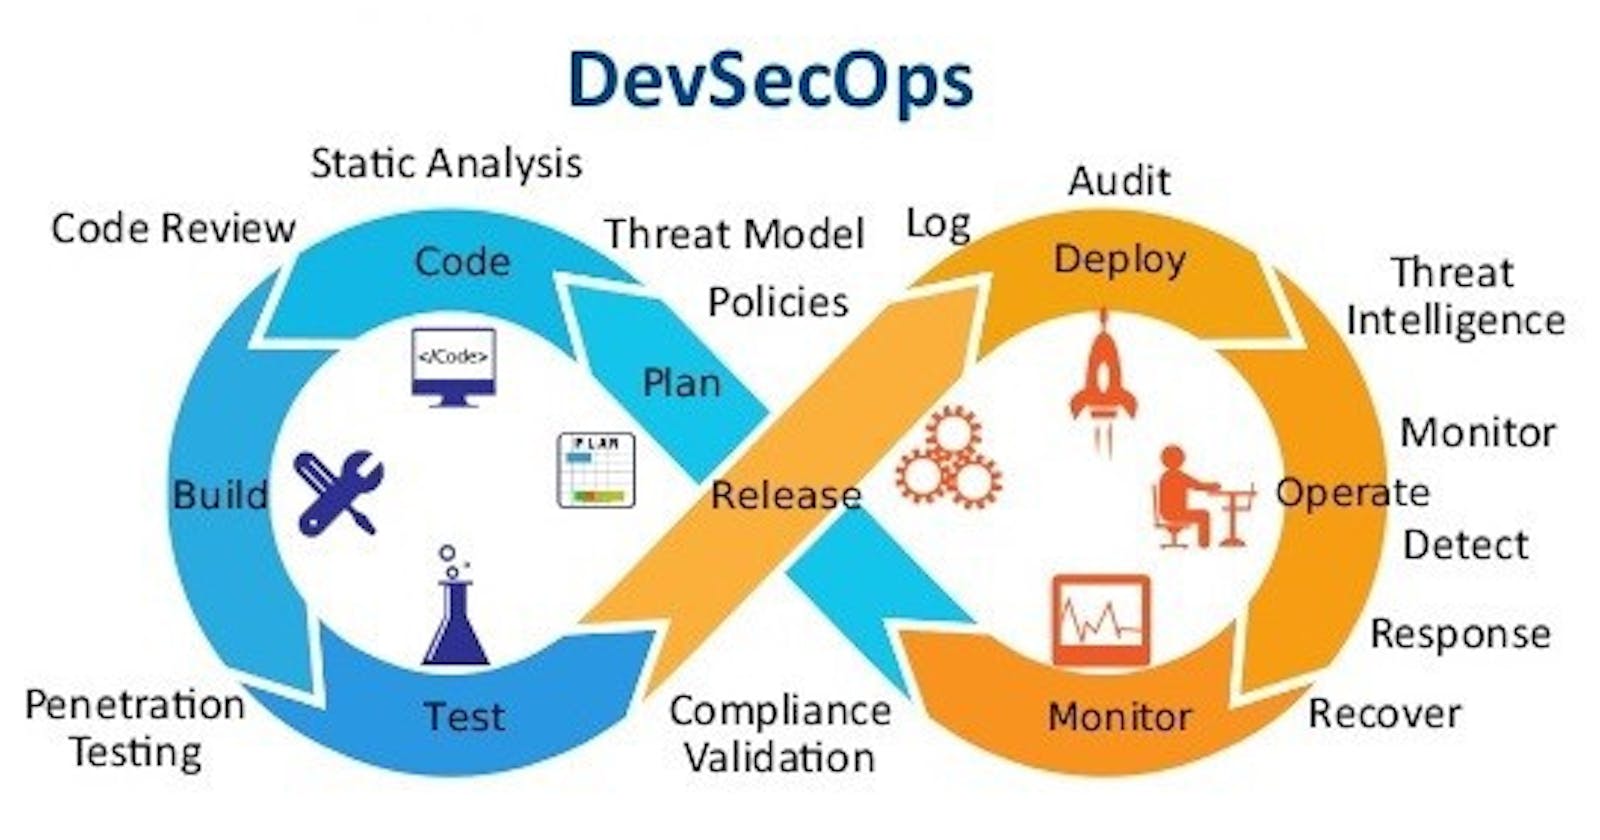 Best practices for DevSecOps